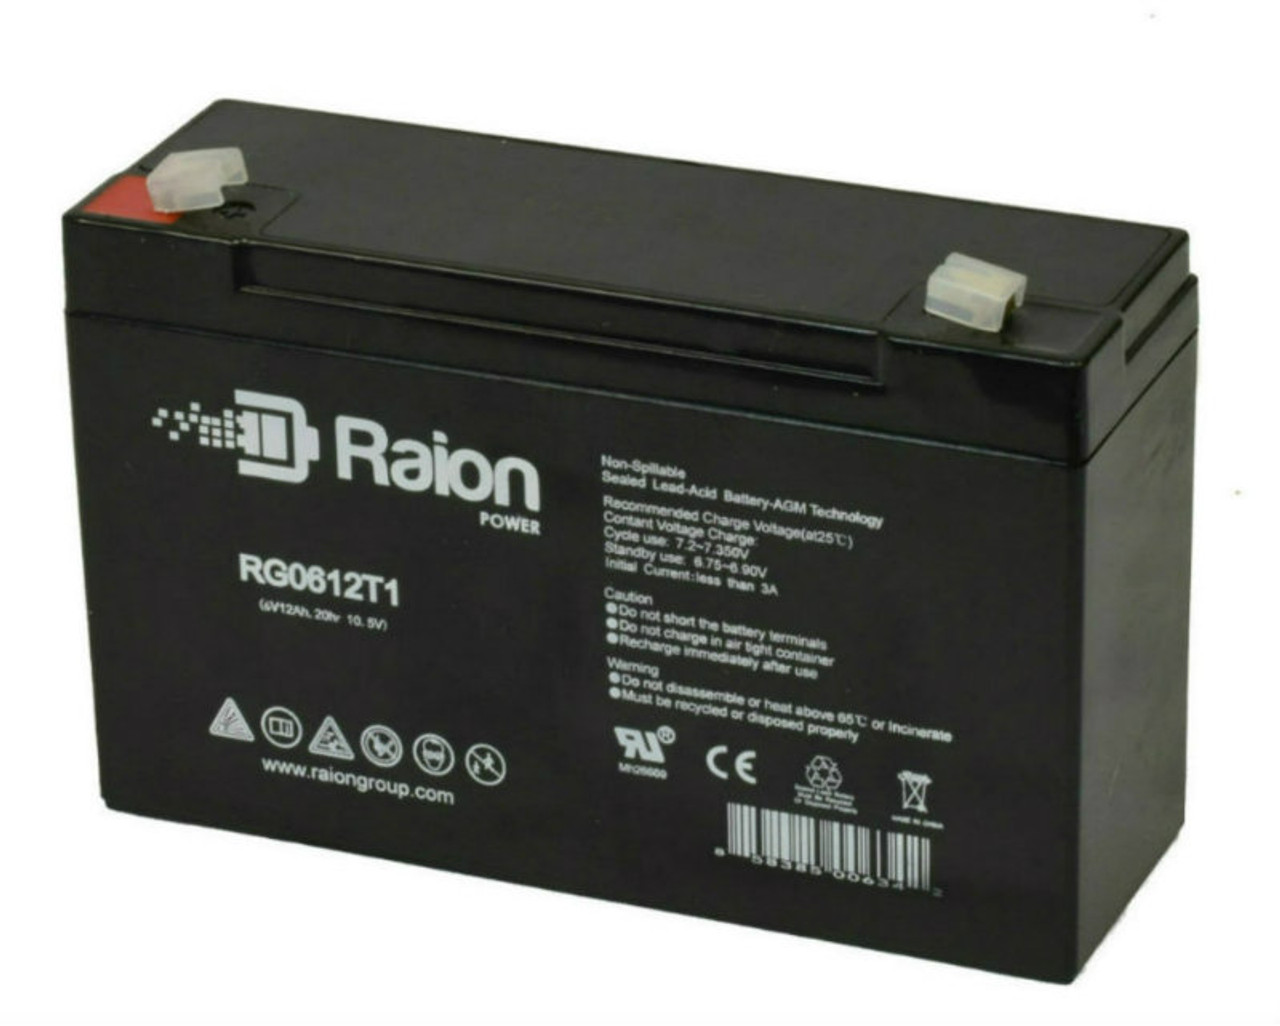 Raion Power RG06120T1 Replacement 6V 12Ah Emergency Light Battery for Light Alarms 6RPG3